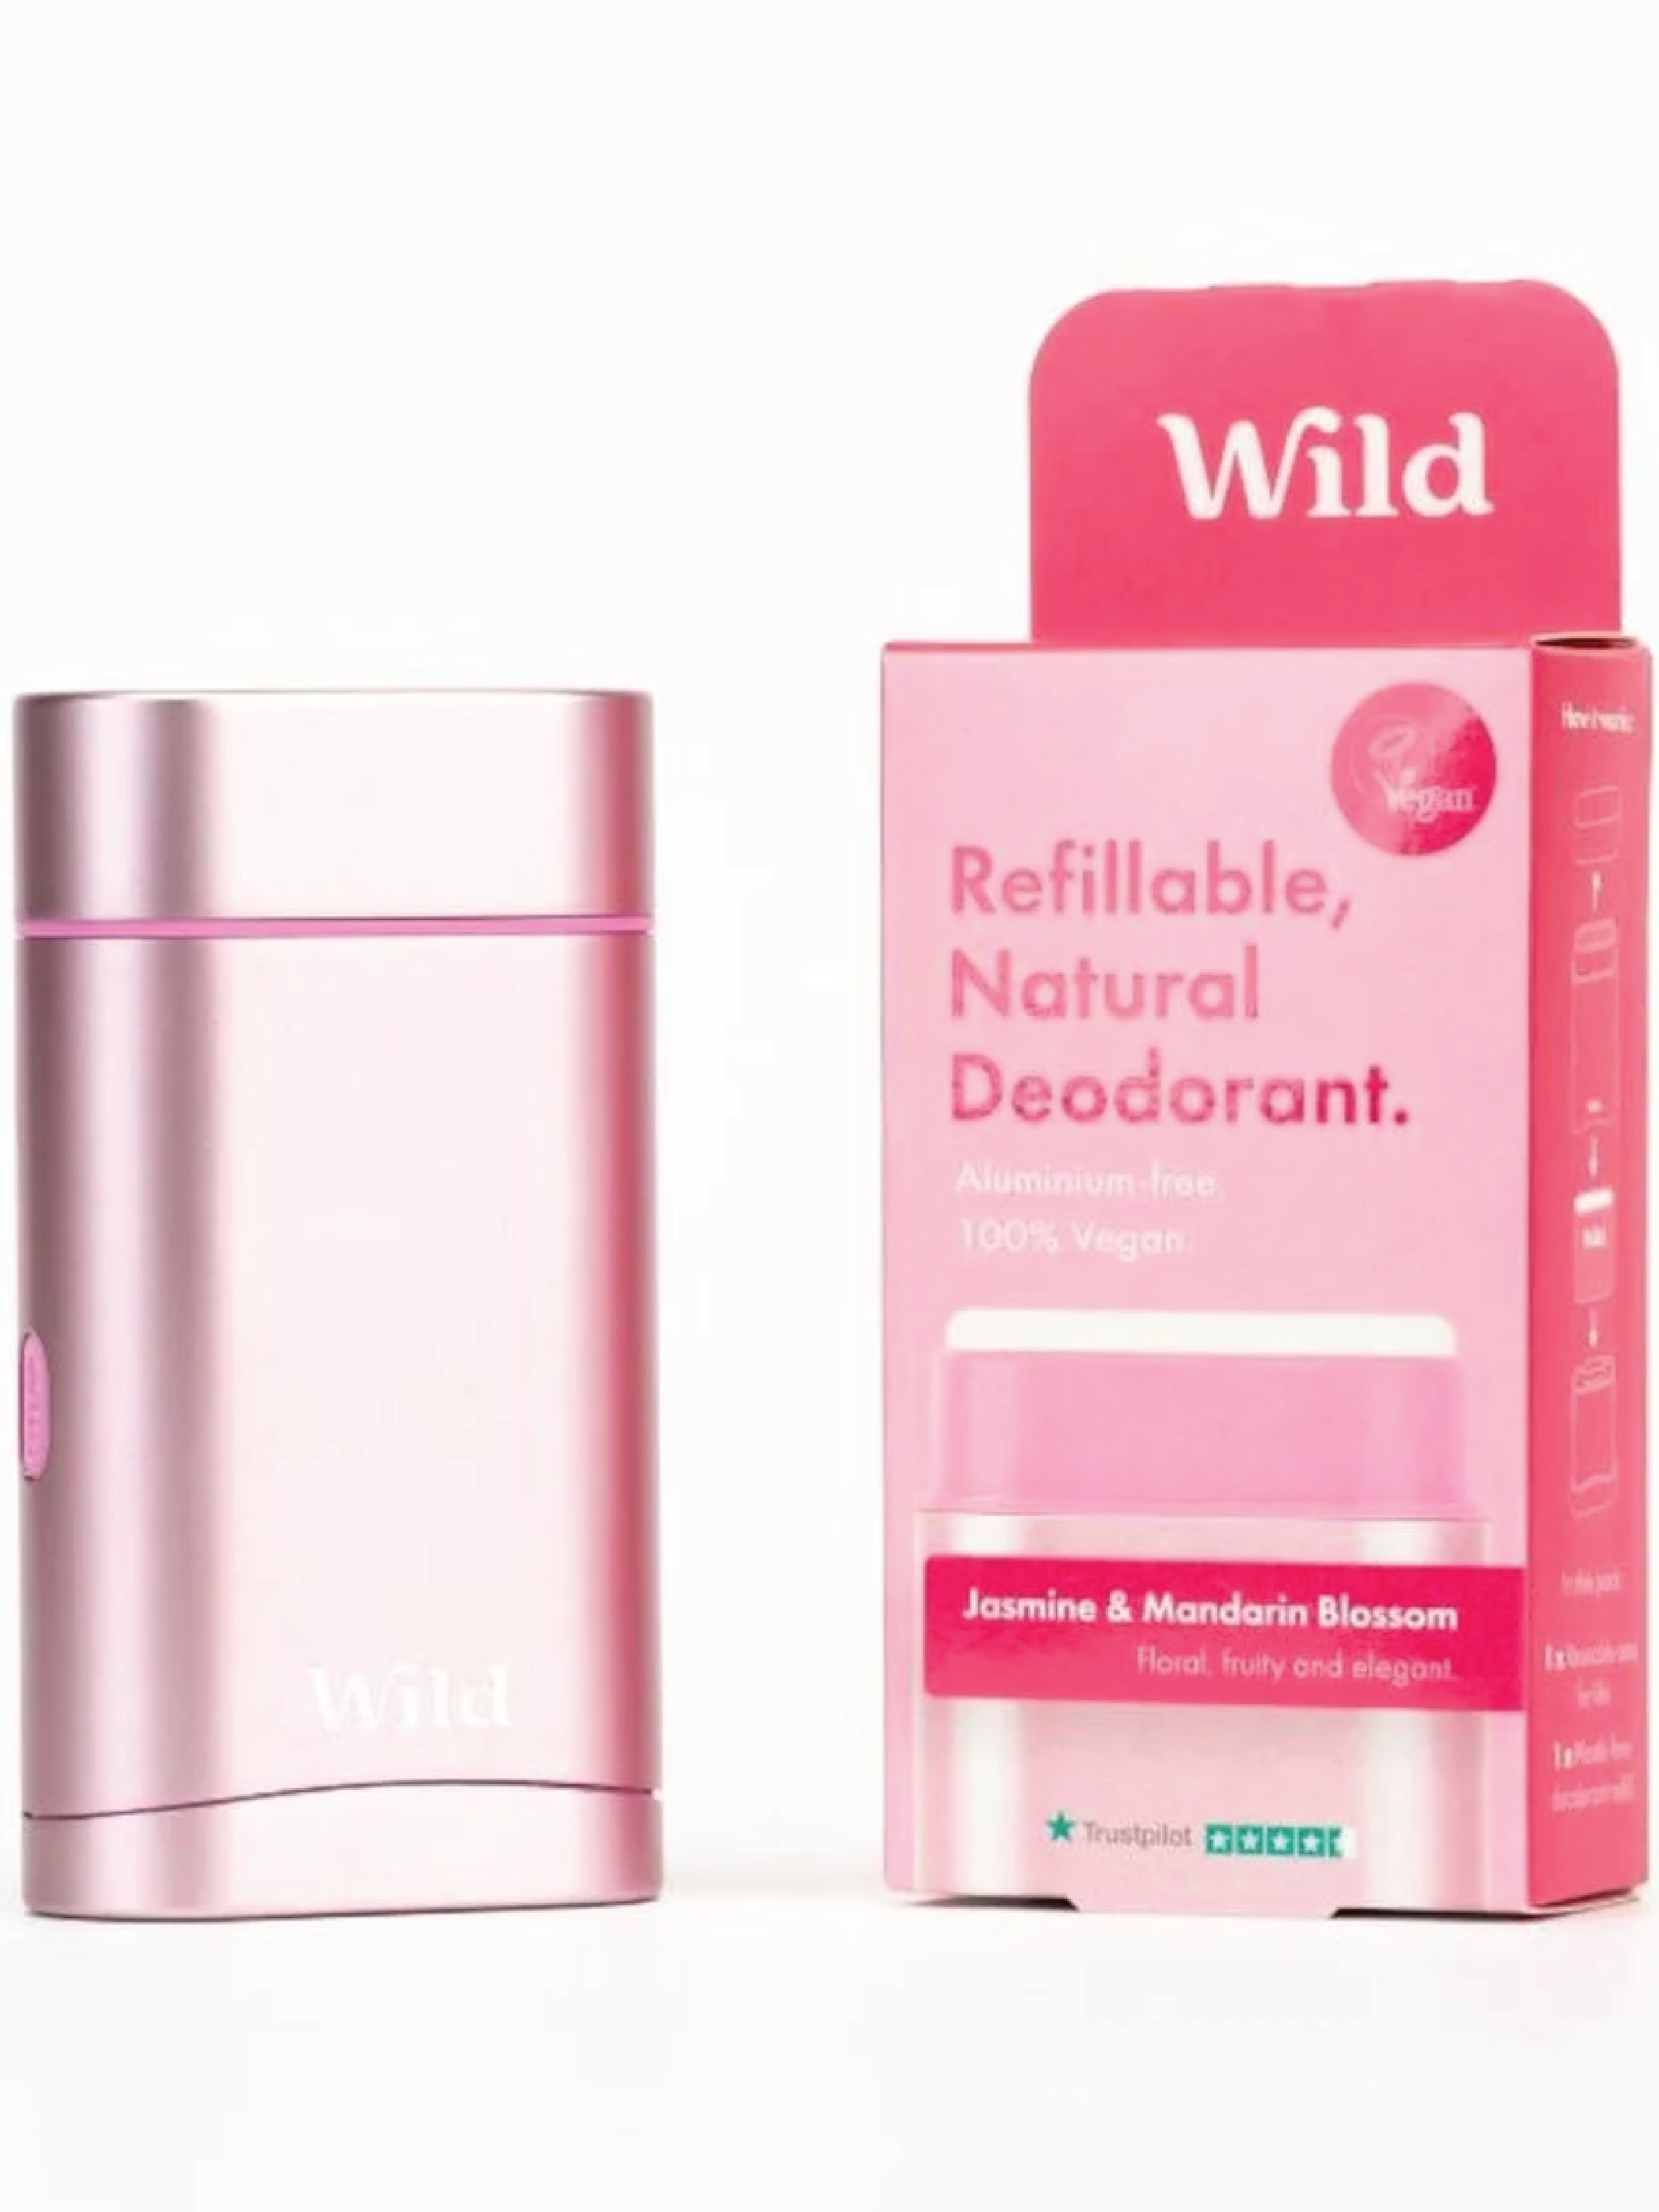 Wild Wild Deo Jasmine & Mandarin Blossom Startpakke, Rosa, 40 g